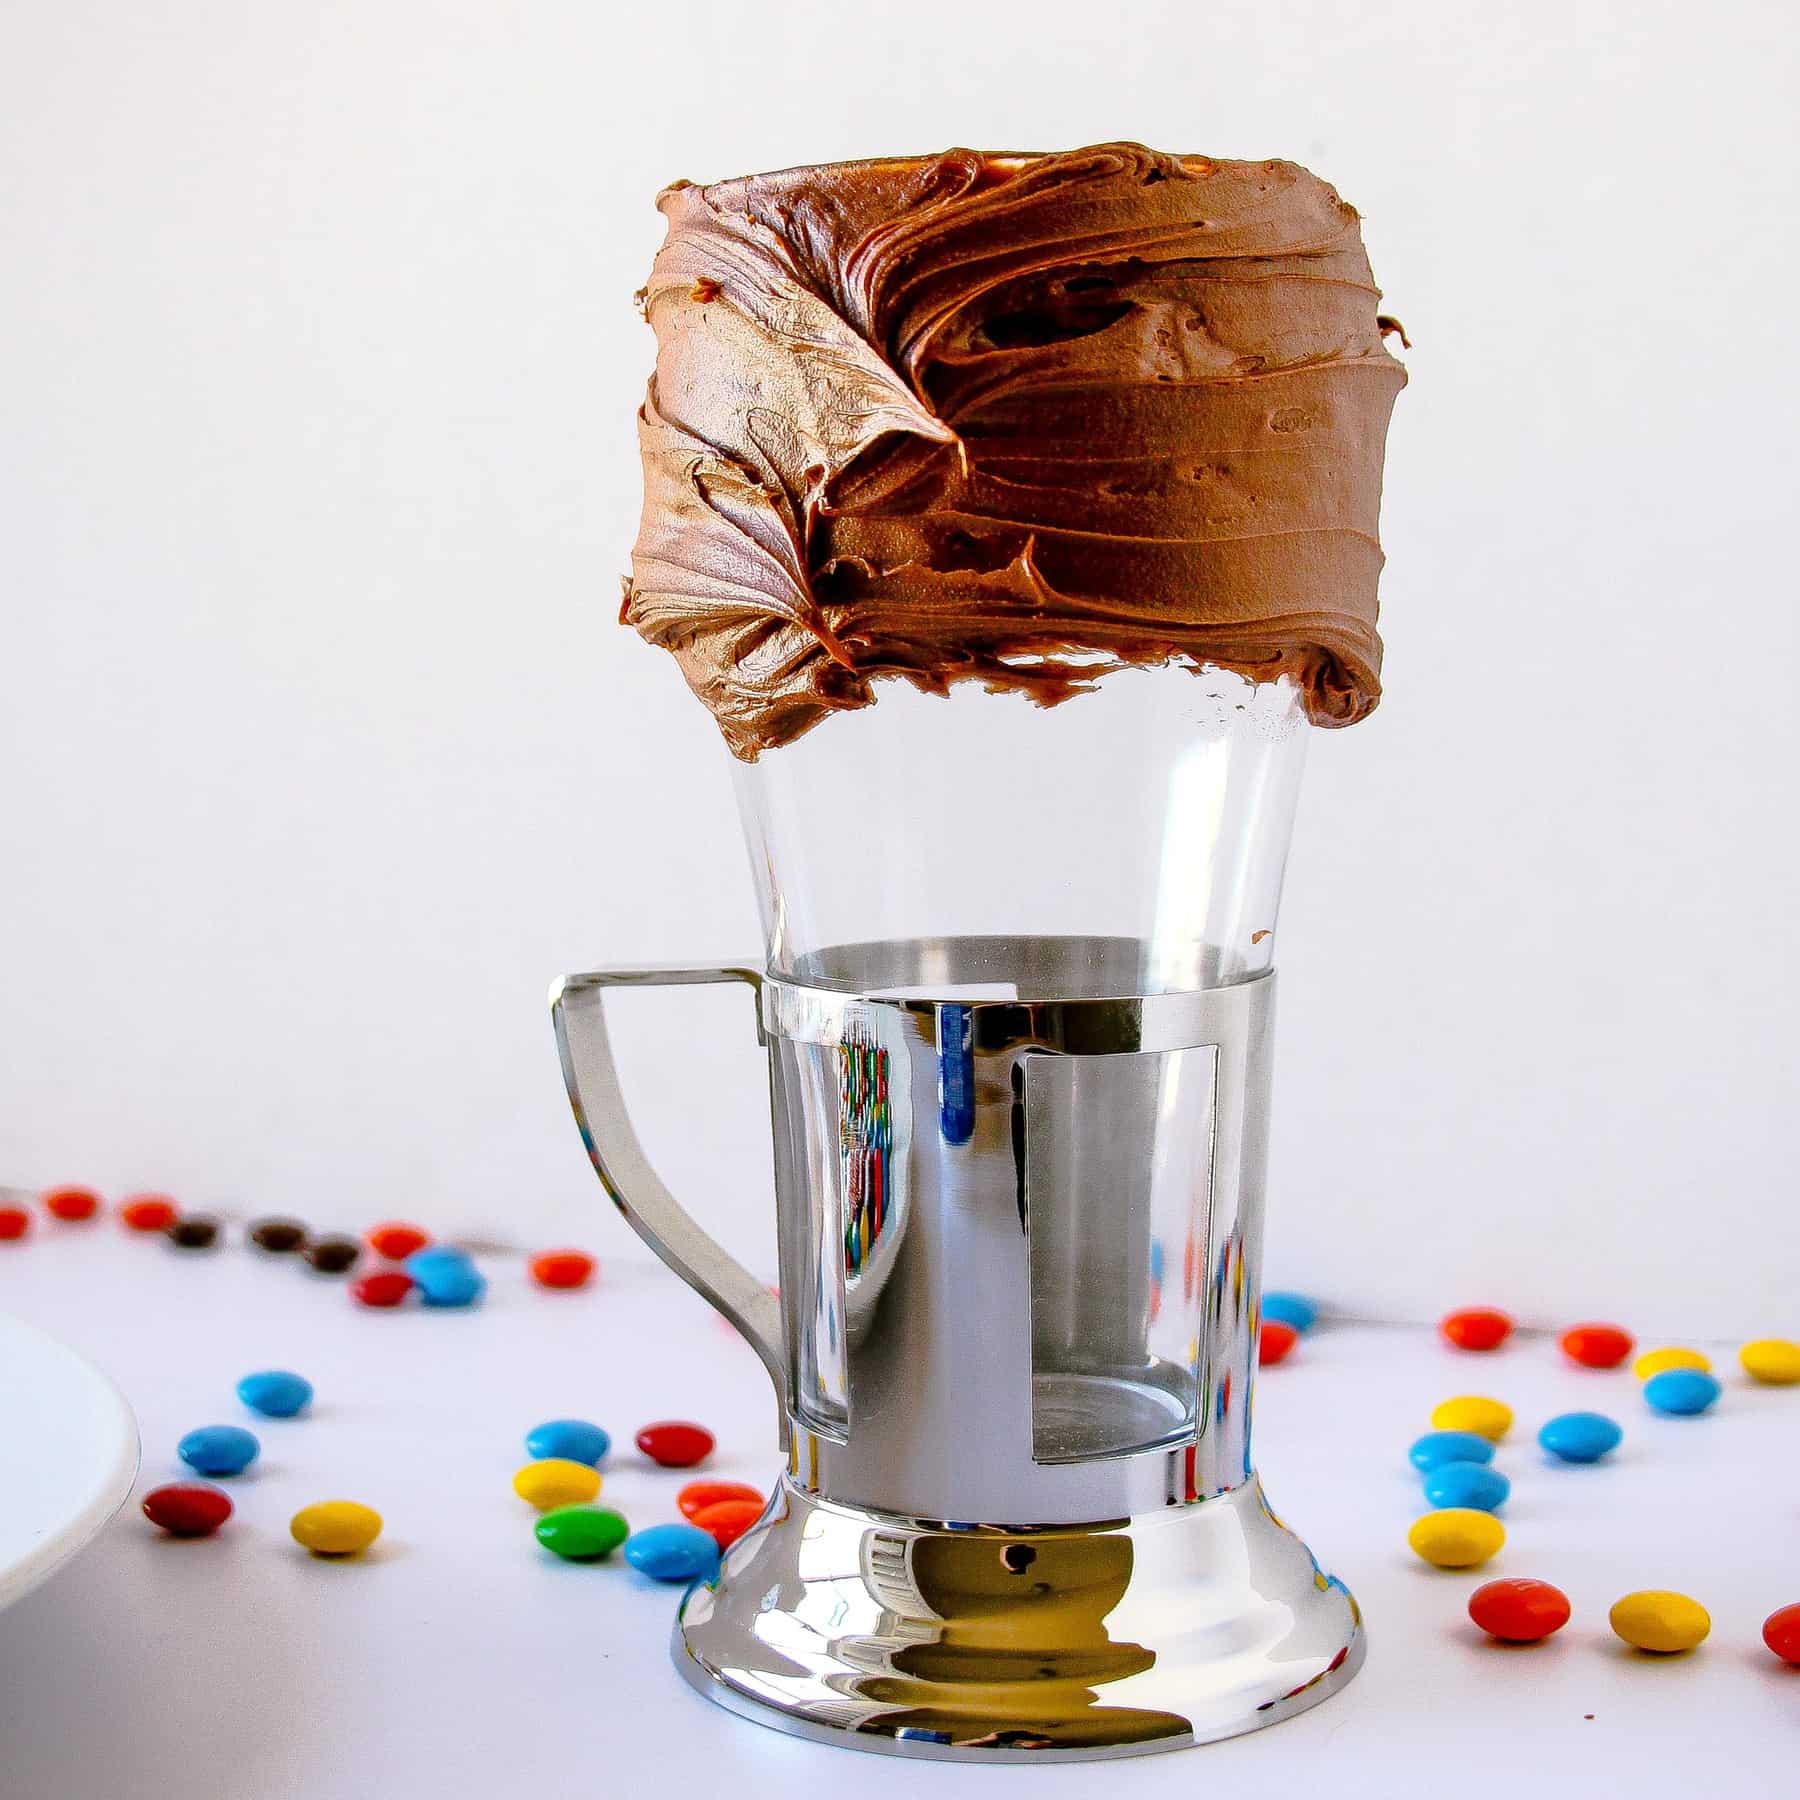 Chocolate frosting on the rim of a milkshake glass